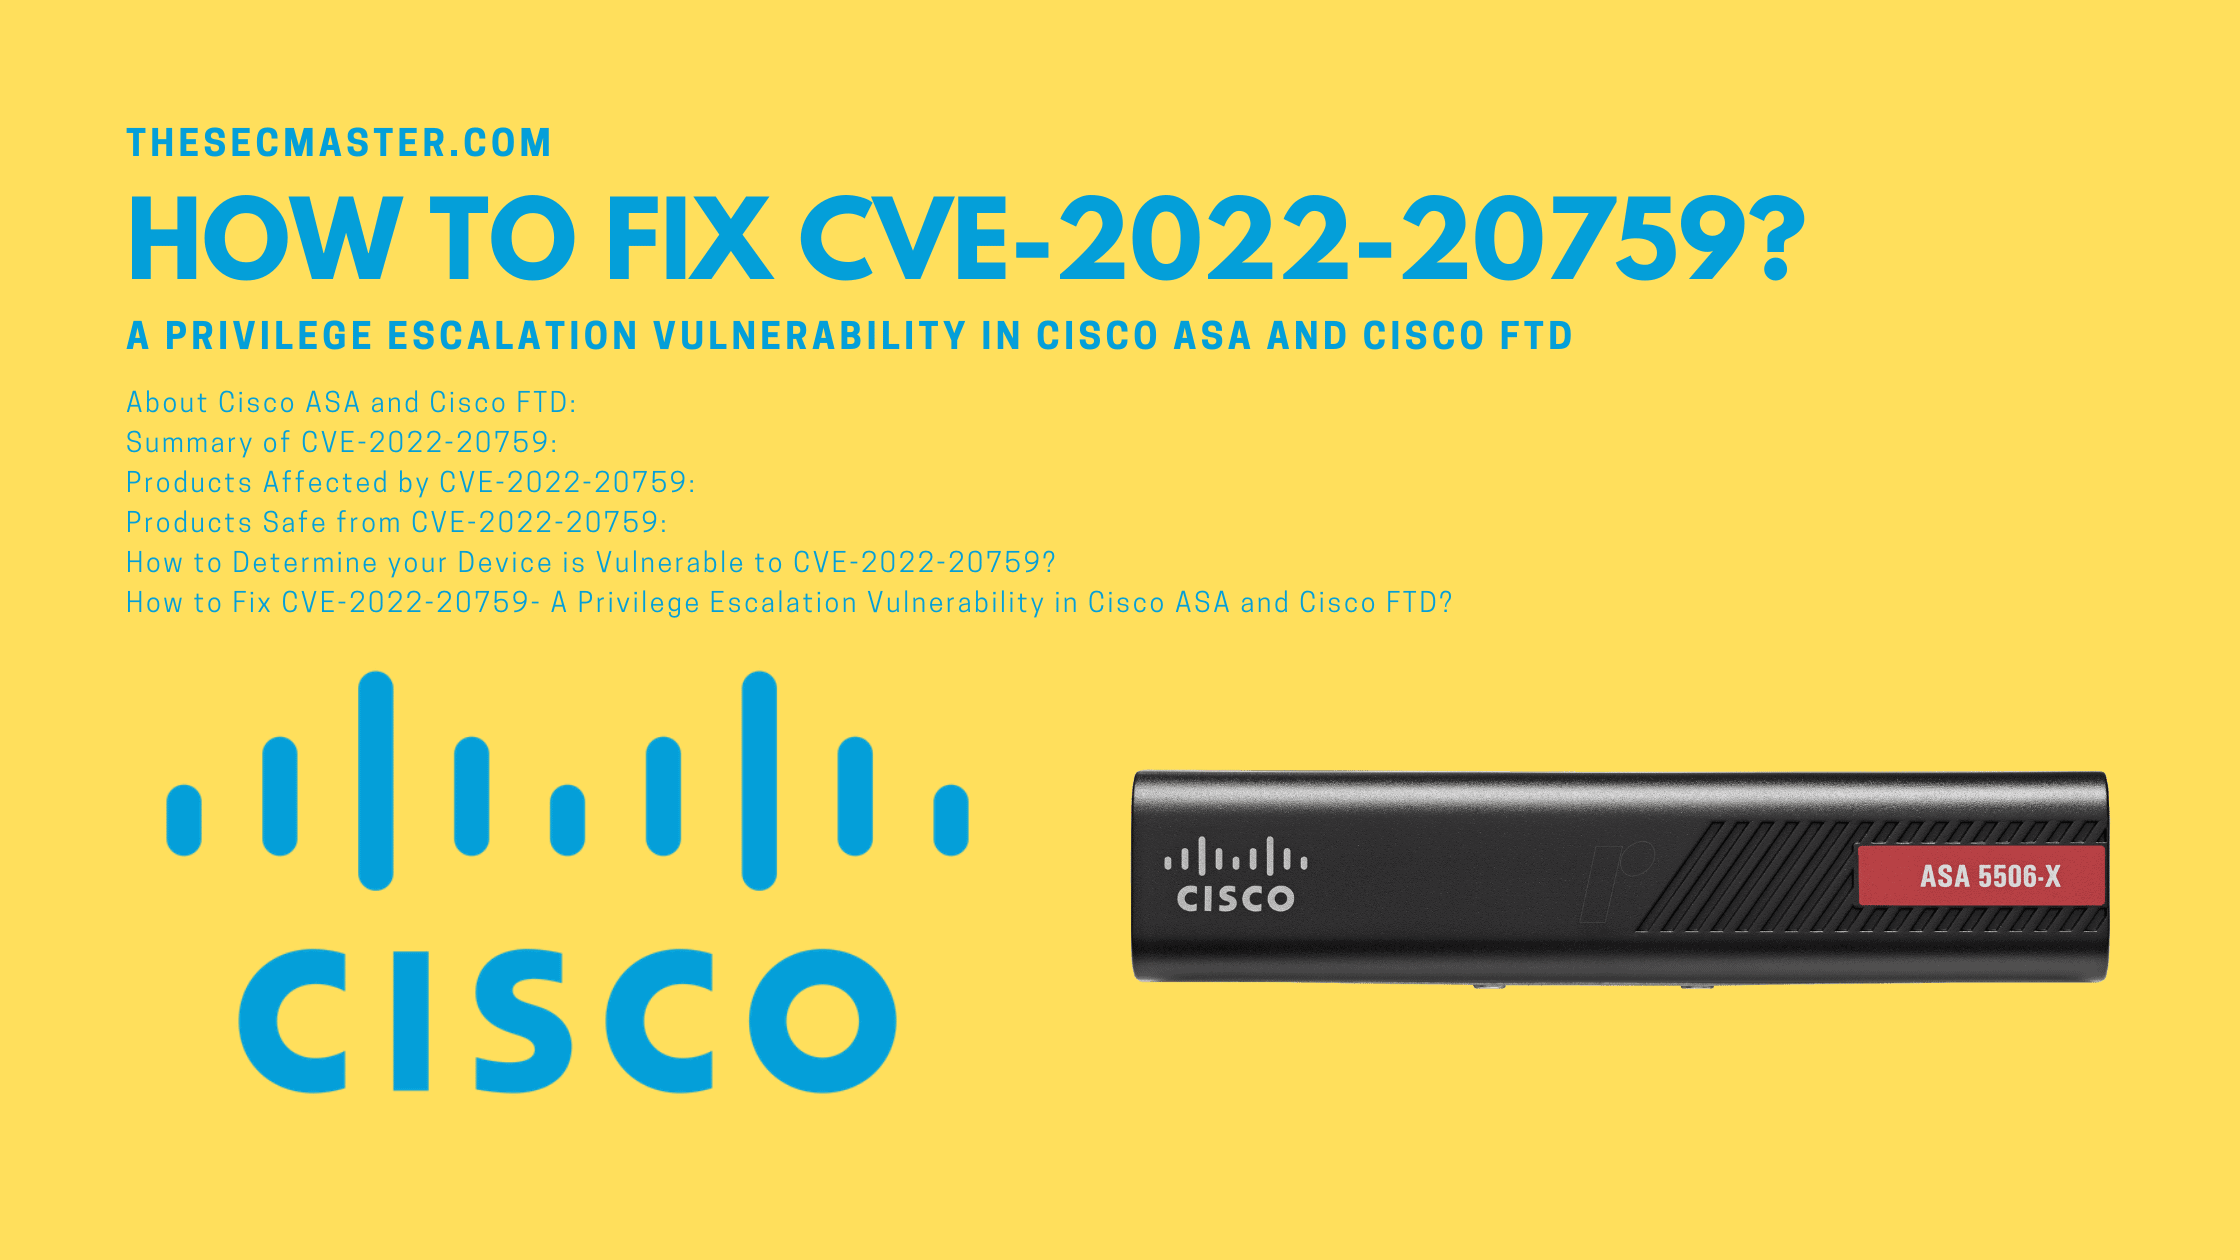 How To Fix Cve 2022 20759 A Privilege Escalation Vulnerability In Cisco Asa And Cisco Ftd